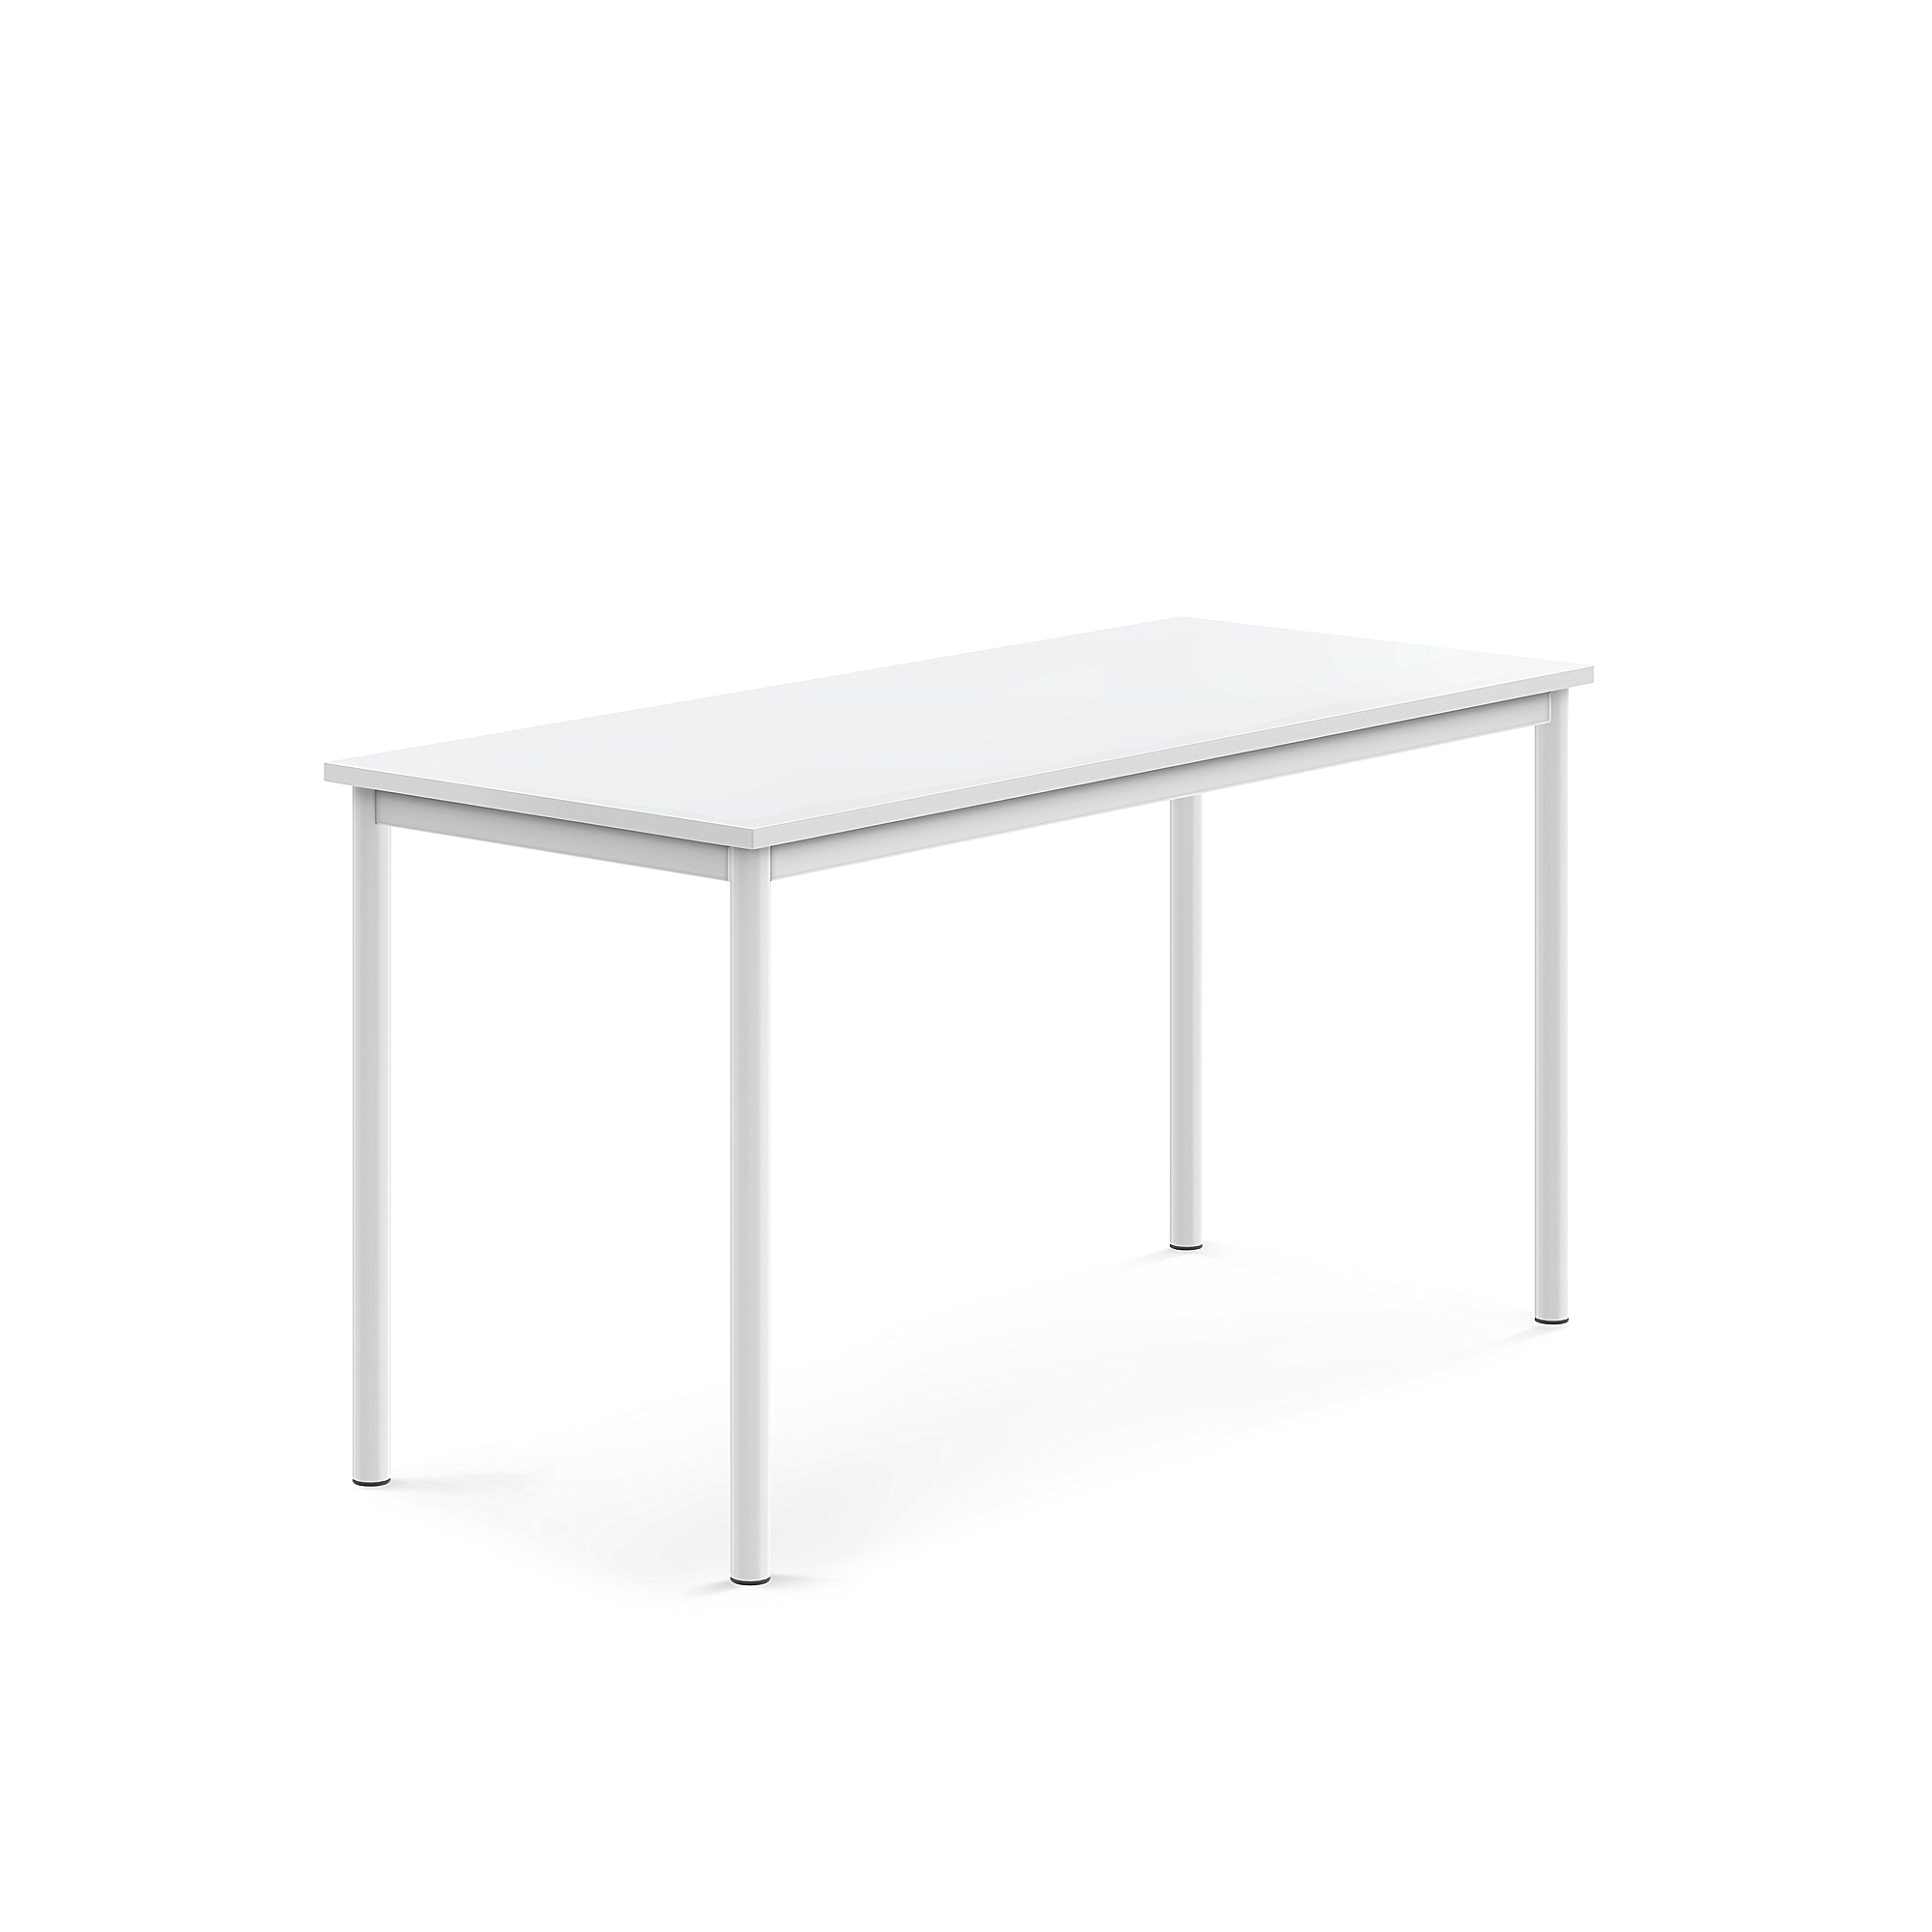 Stůl SONITUS, 1400x600x720 mm, bílé nohy, HPL deska tlumící hluk, bílá